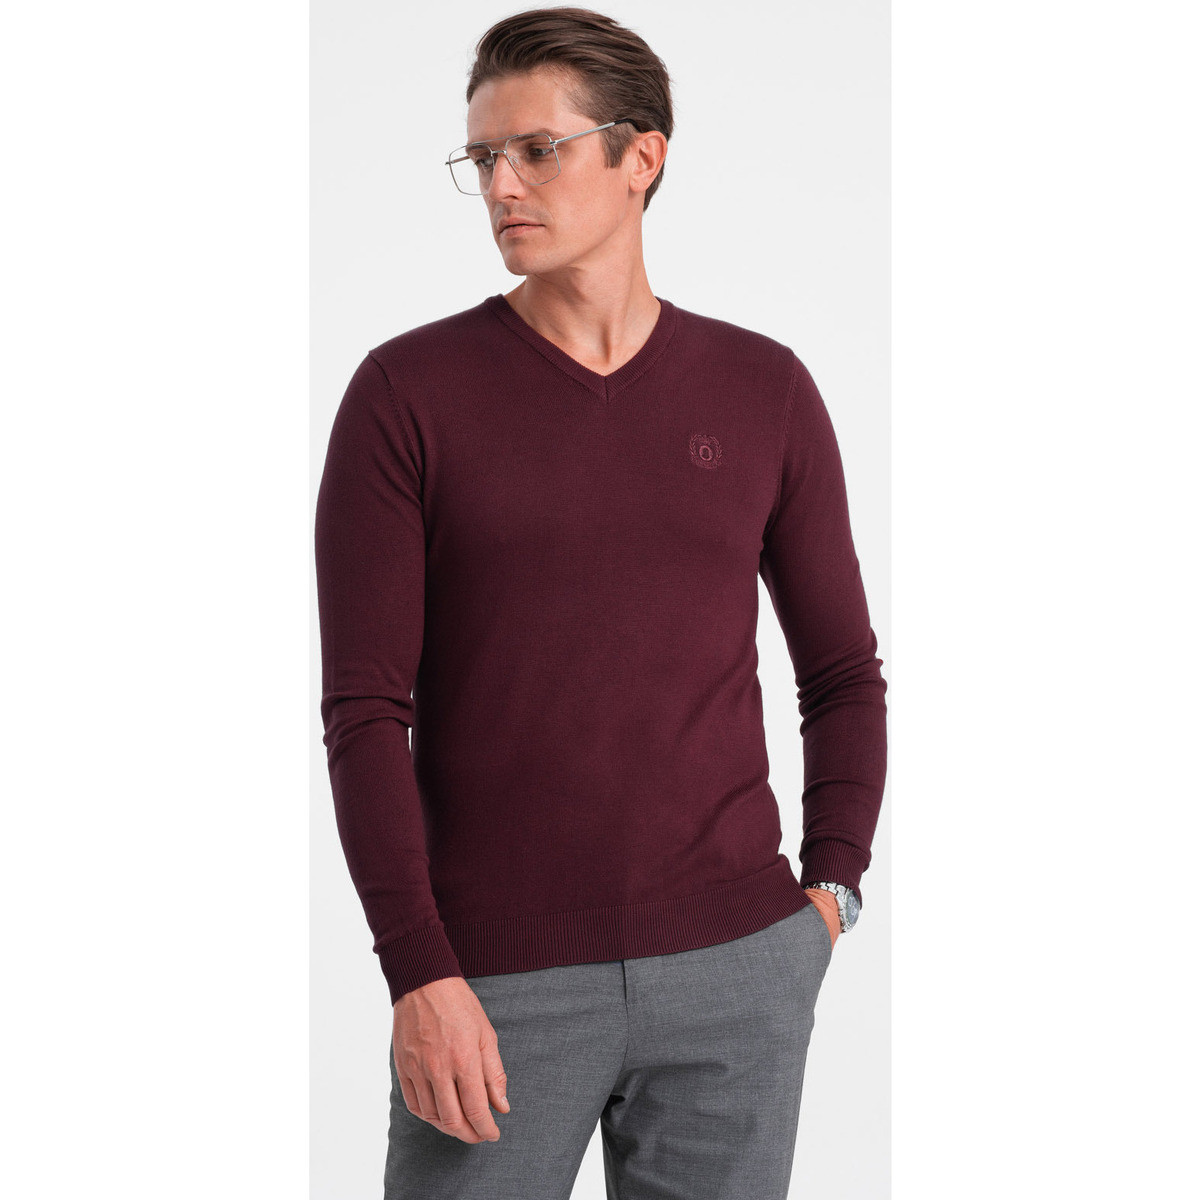 Ombre  Elegant men apos;s sweater with a v-neck - maroon V13 OM-SWBS  ruznobarevne